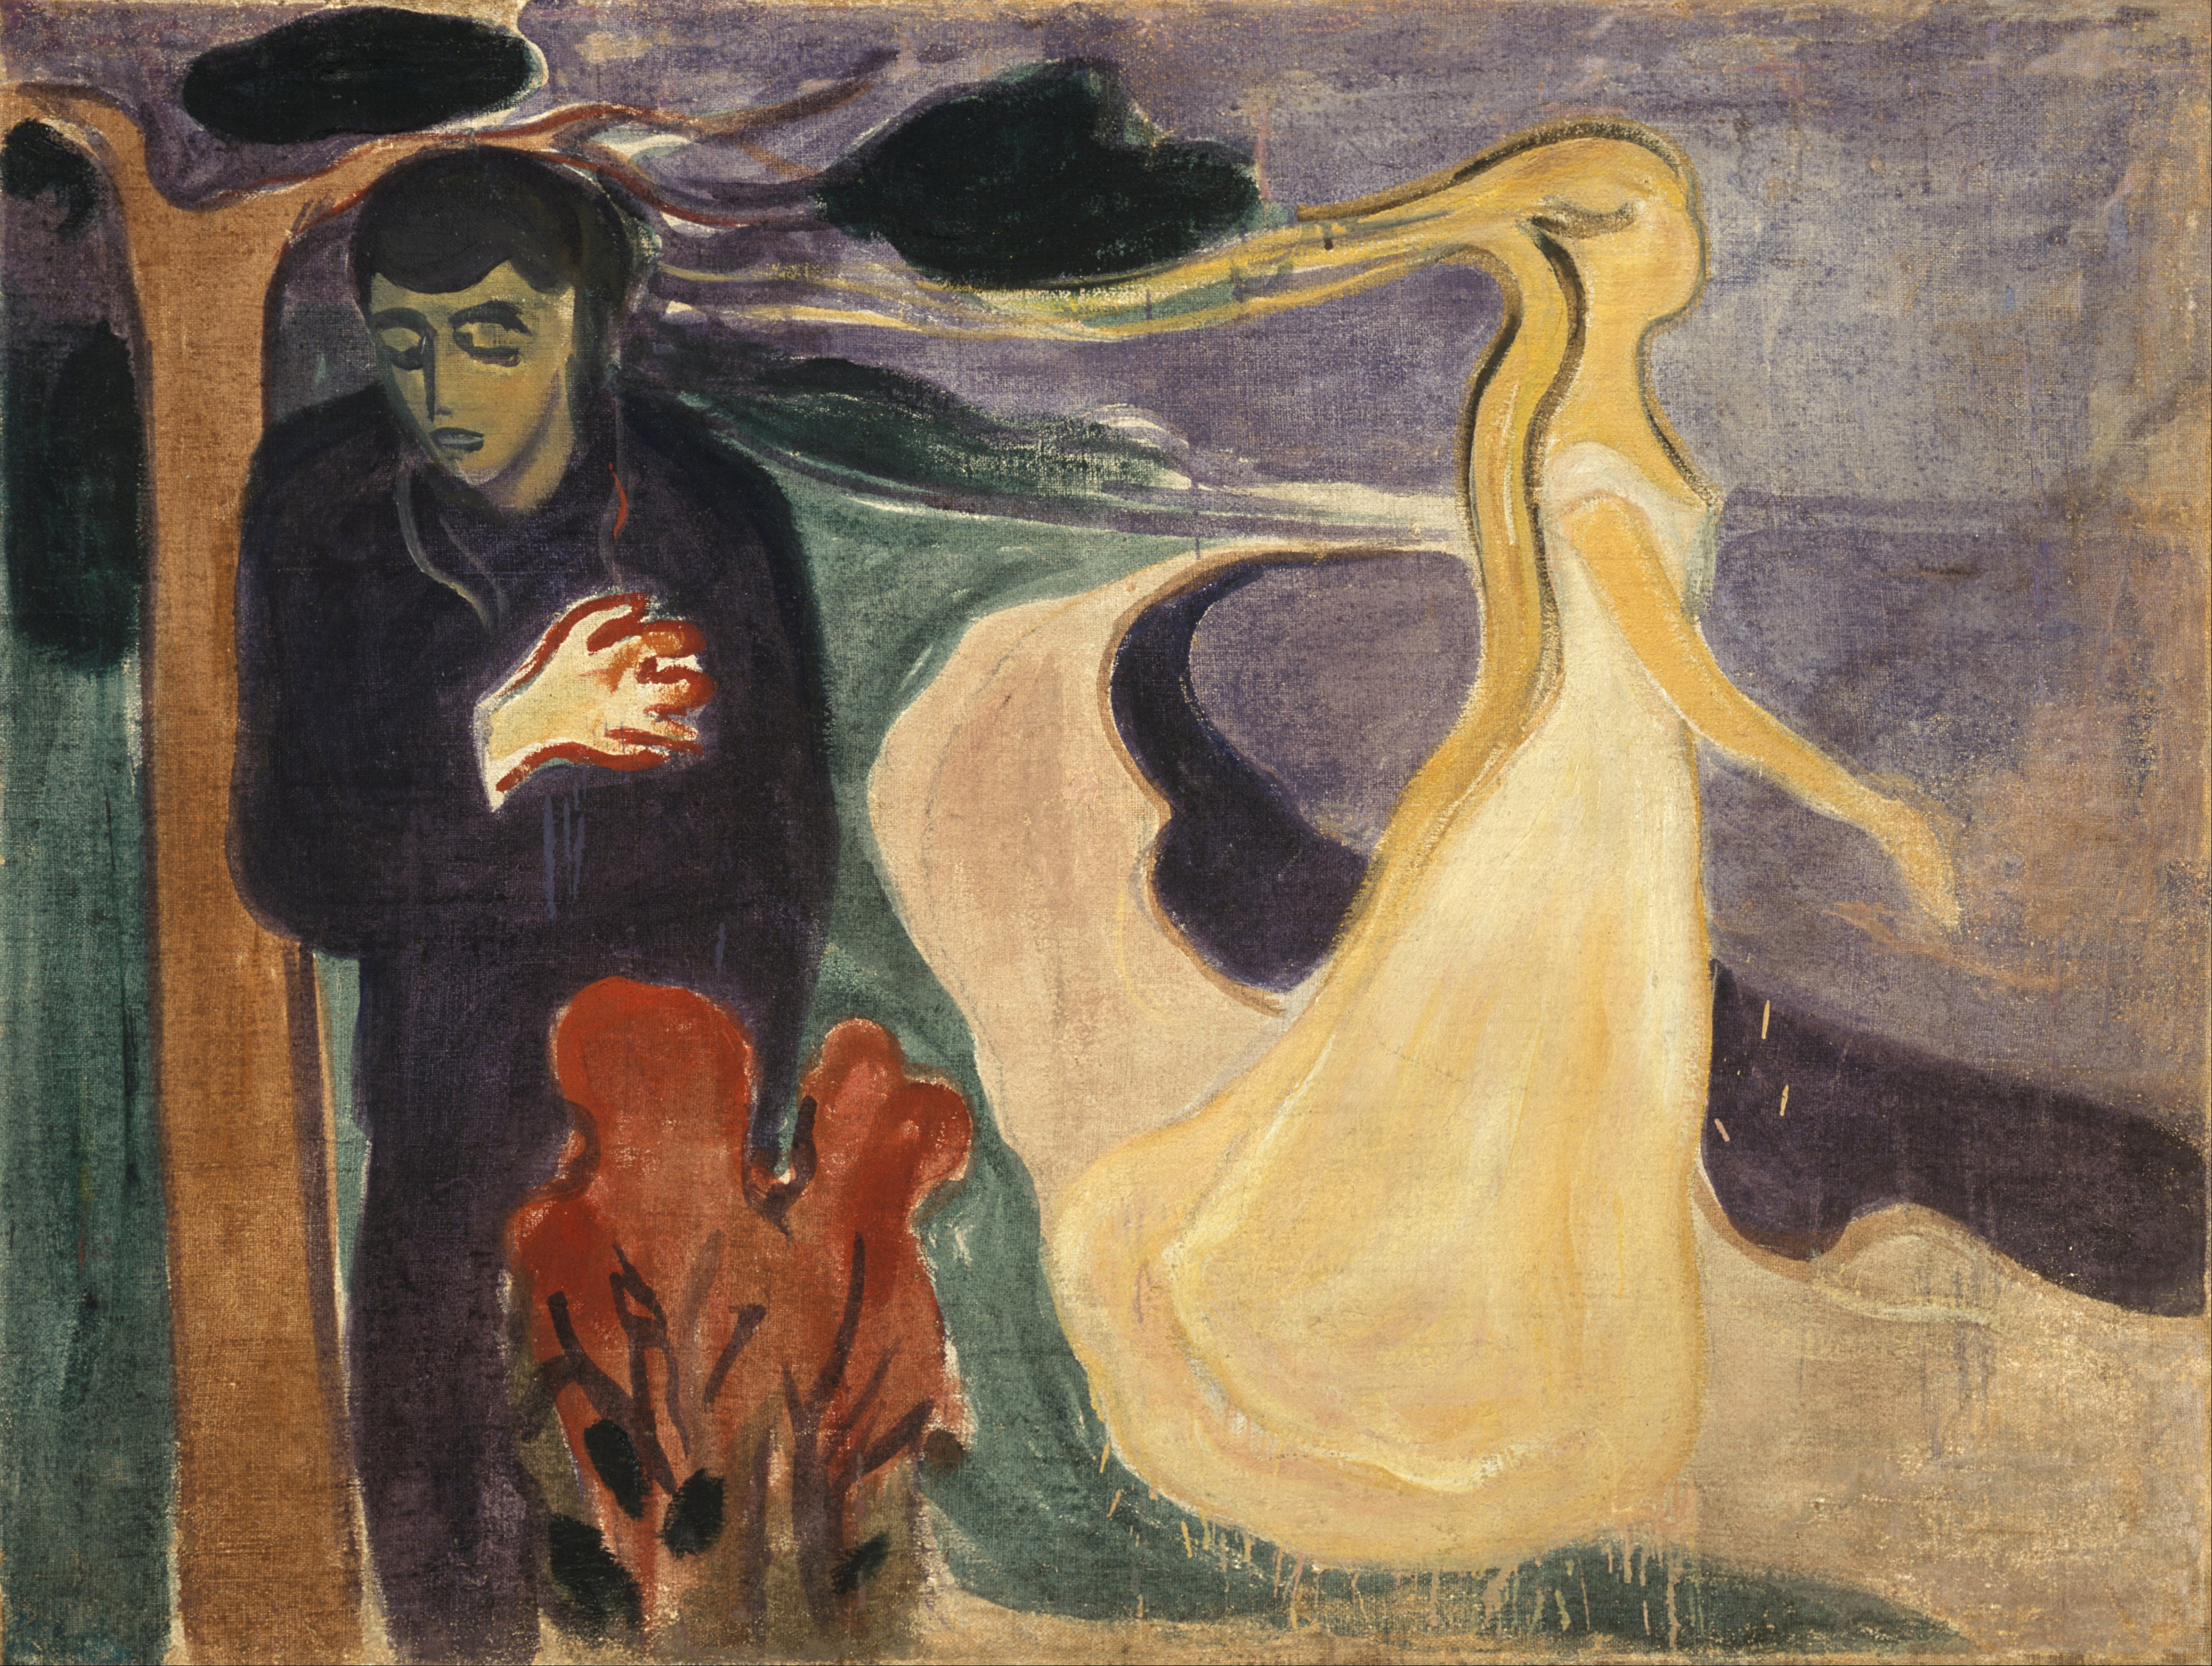 分手 by Edvard Munch - 1896 - 96 × 127 cm 